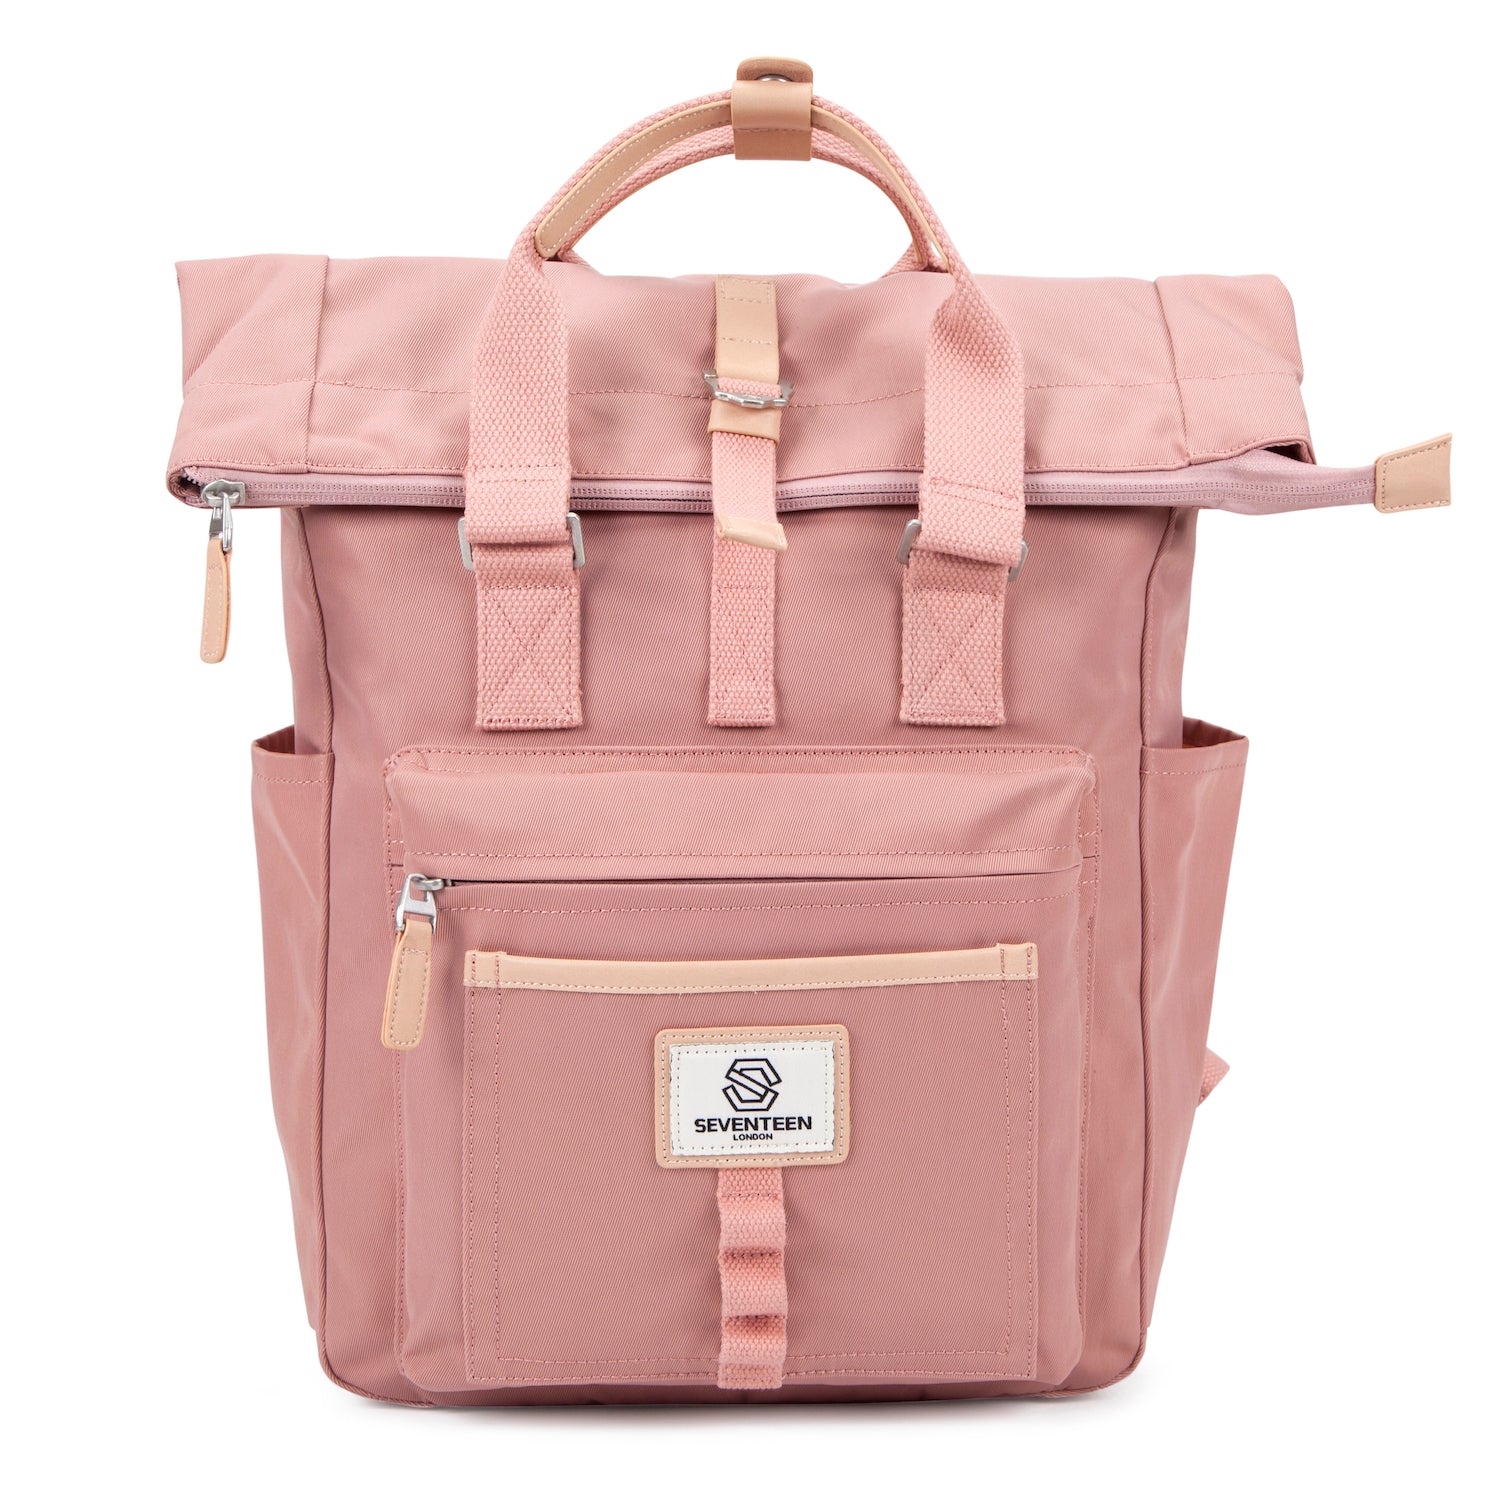 Canary Wharf Backpack - Pink